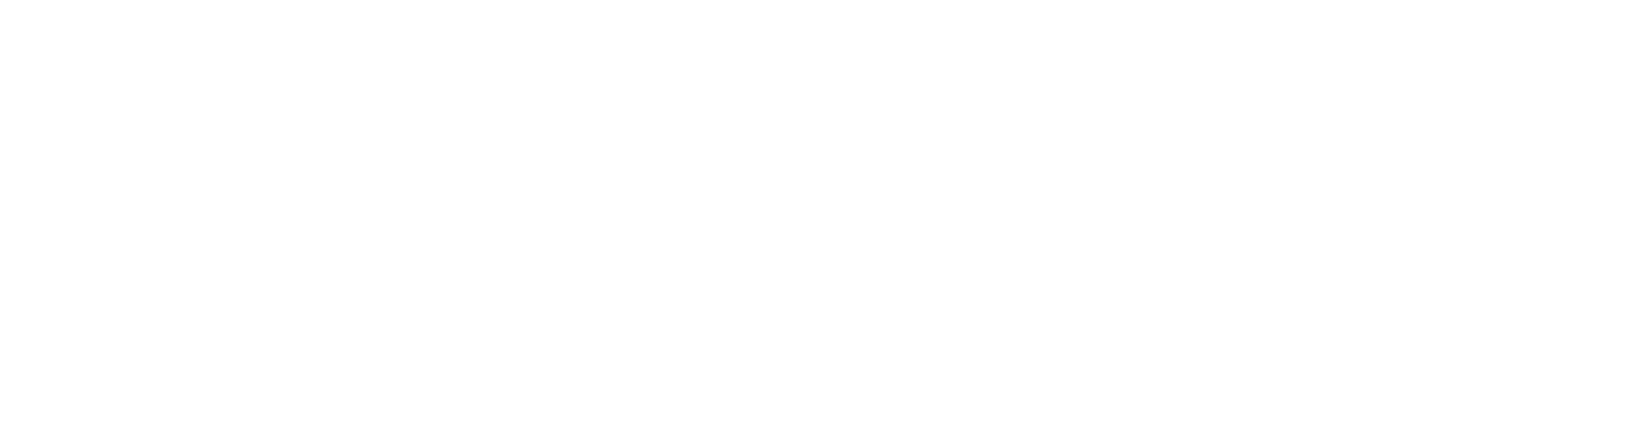 Alexander Ranch, Inc.